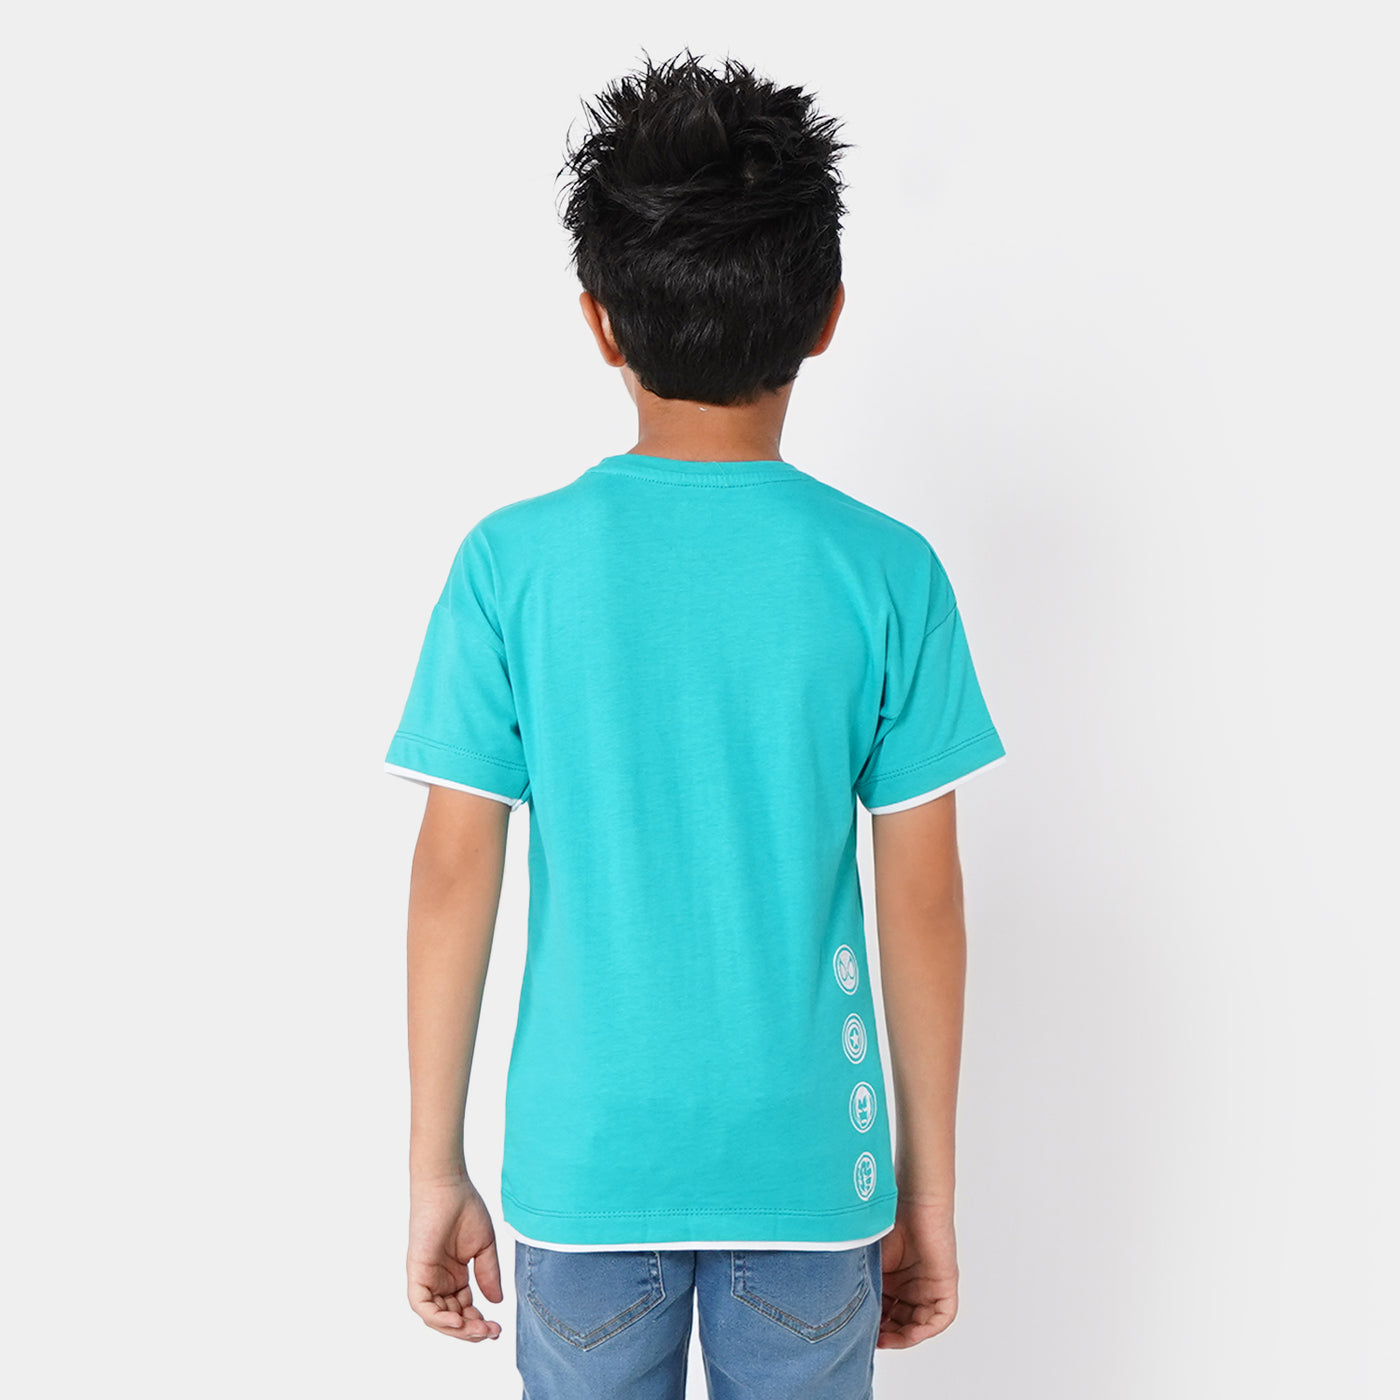 Boys T-Shirt CHARACTER - Blue